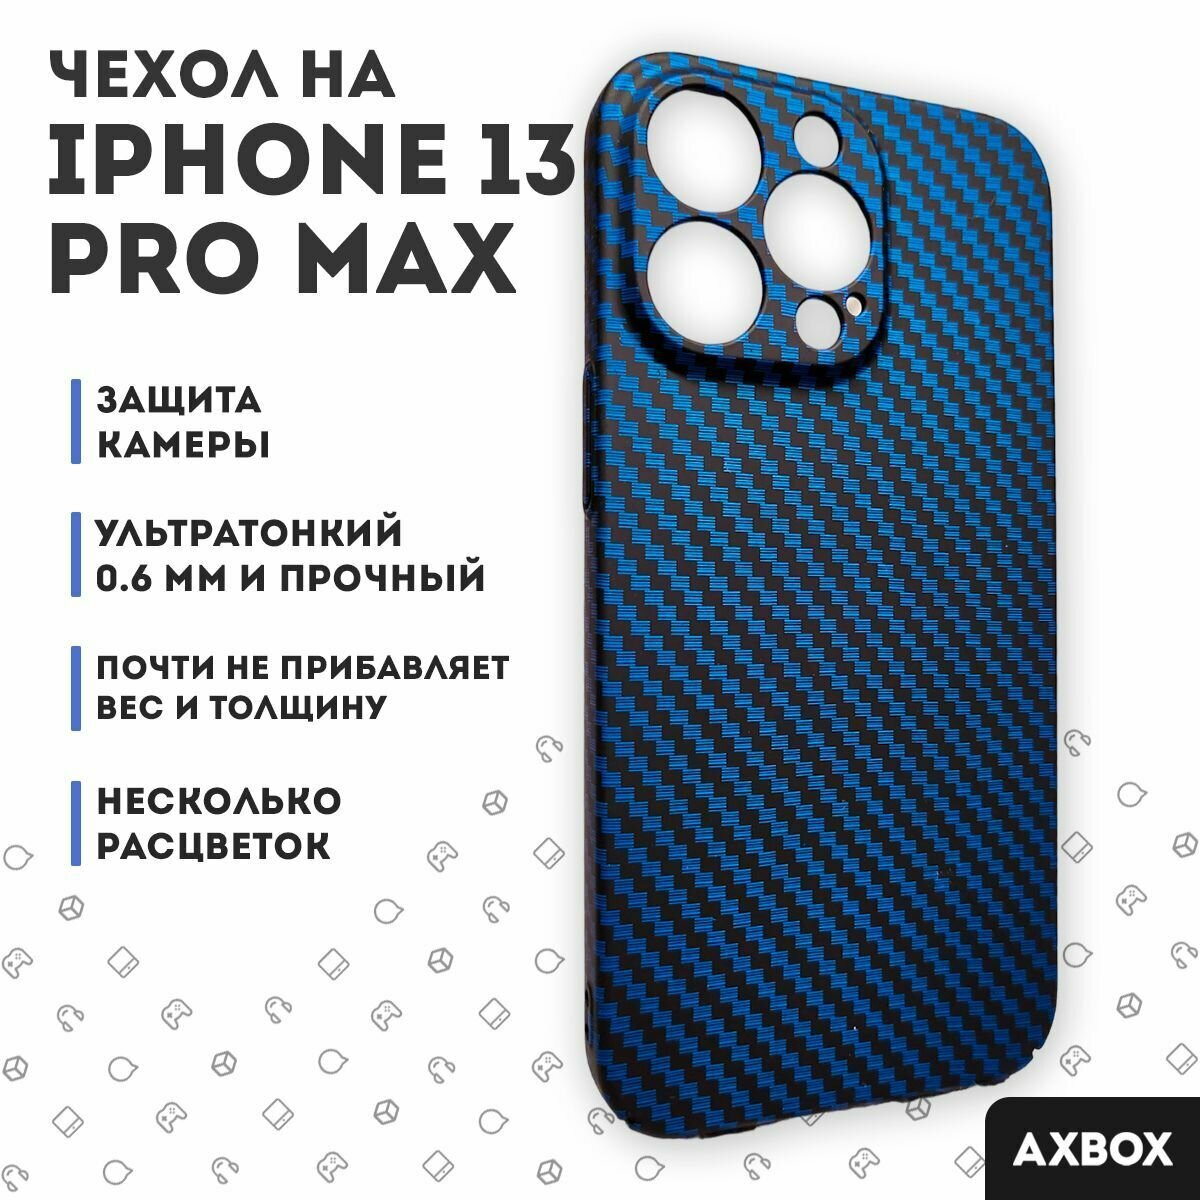 Тонкий карбоновый чехол AXBOX на iPhone 13 Pro Max синий, с зашитой камеры